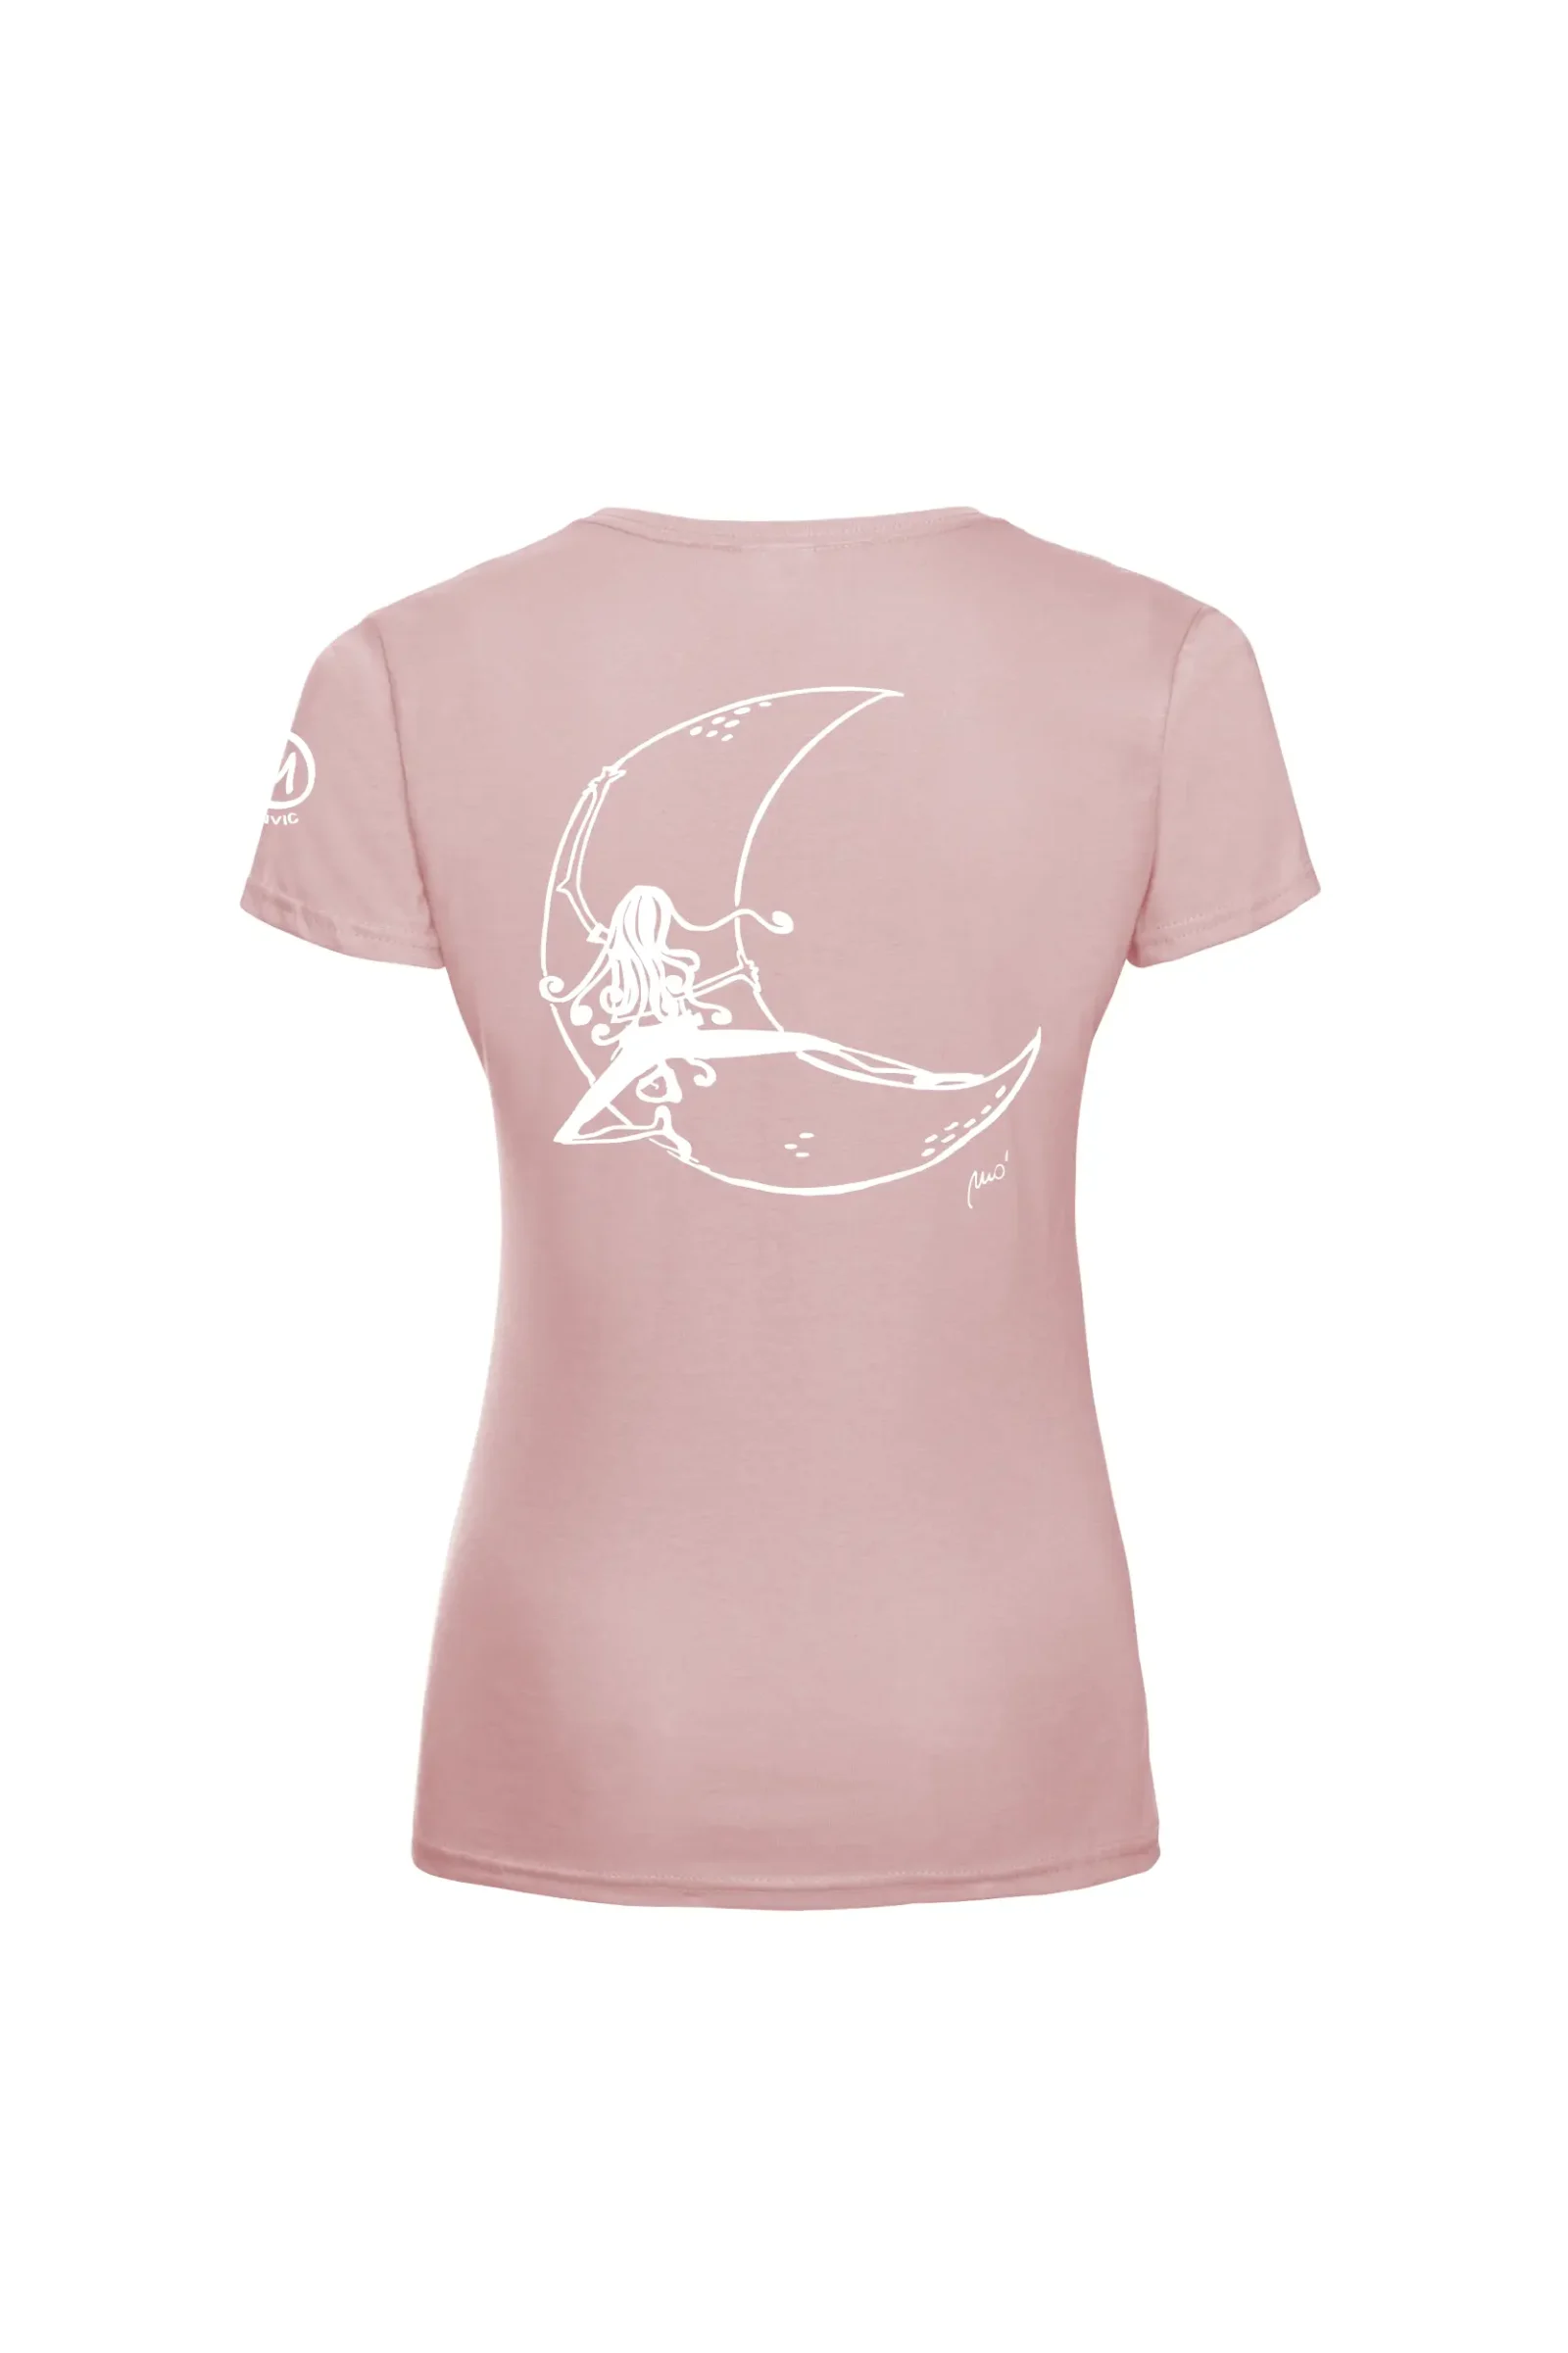 T-shirt arrampicata donna - cotone organico rosa - "Moon" - SHARON ORGANIC by MONVIC